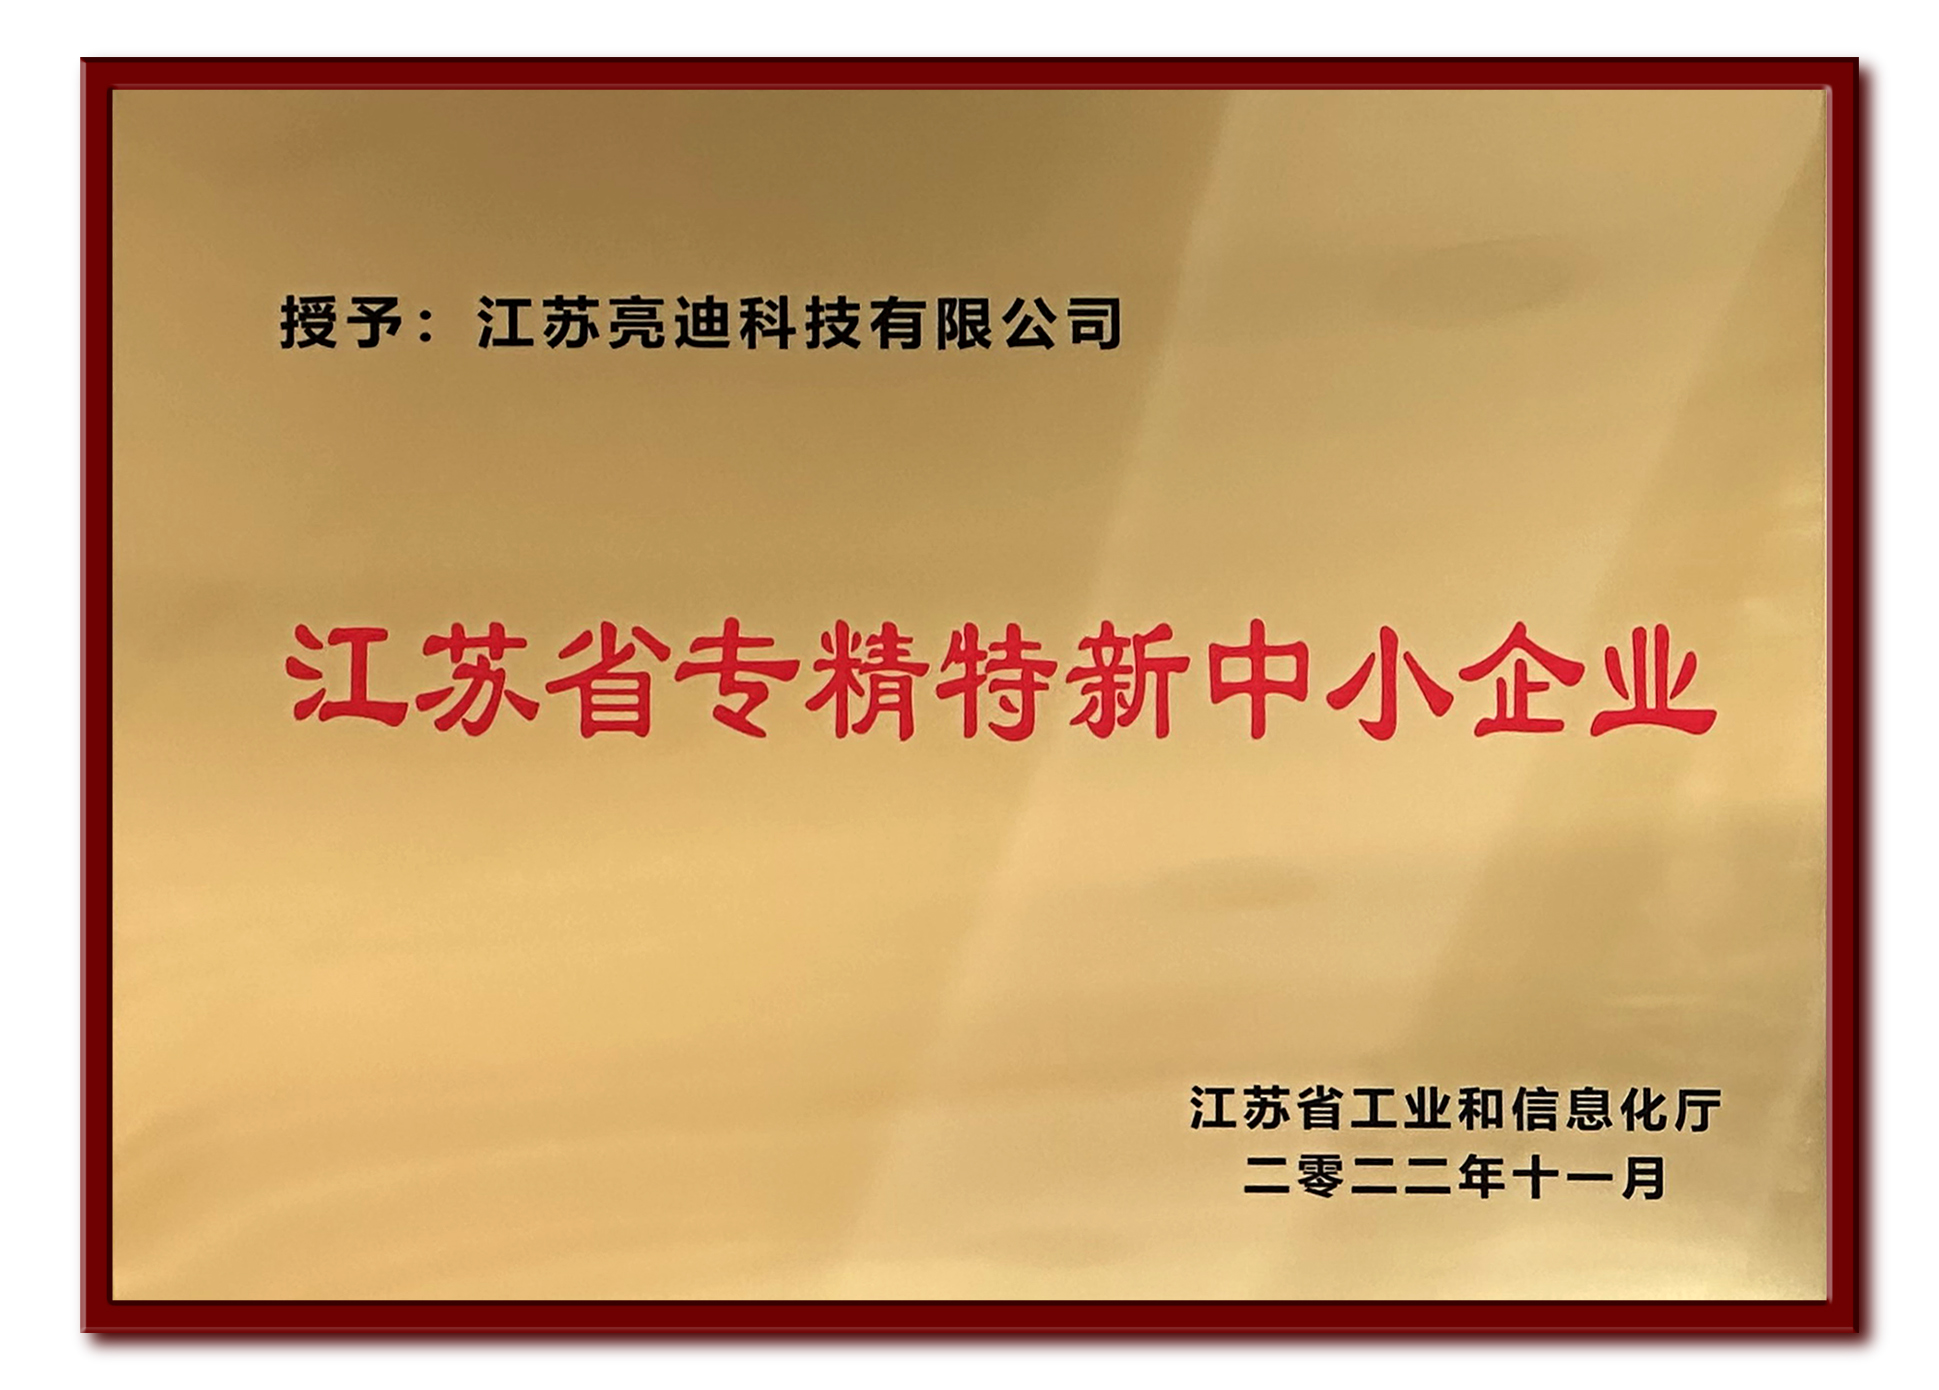 Honor again! Our company has won the “2022 Jiangsu Province Specialized innovation enterprise”